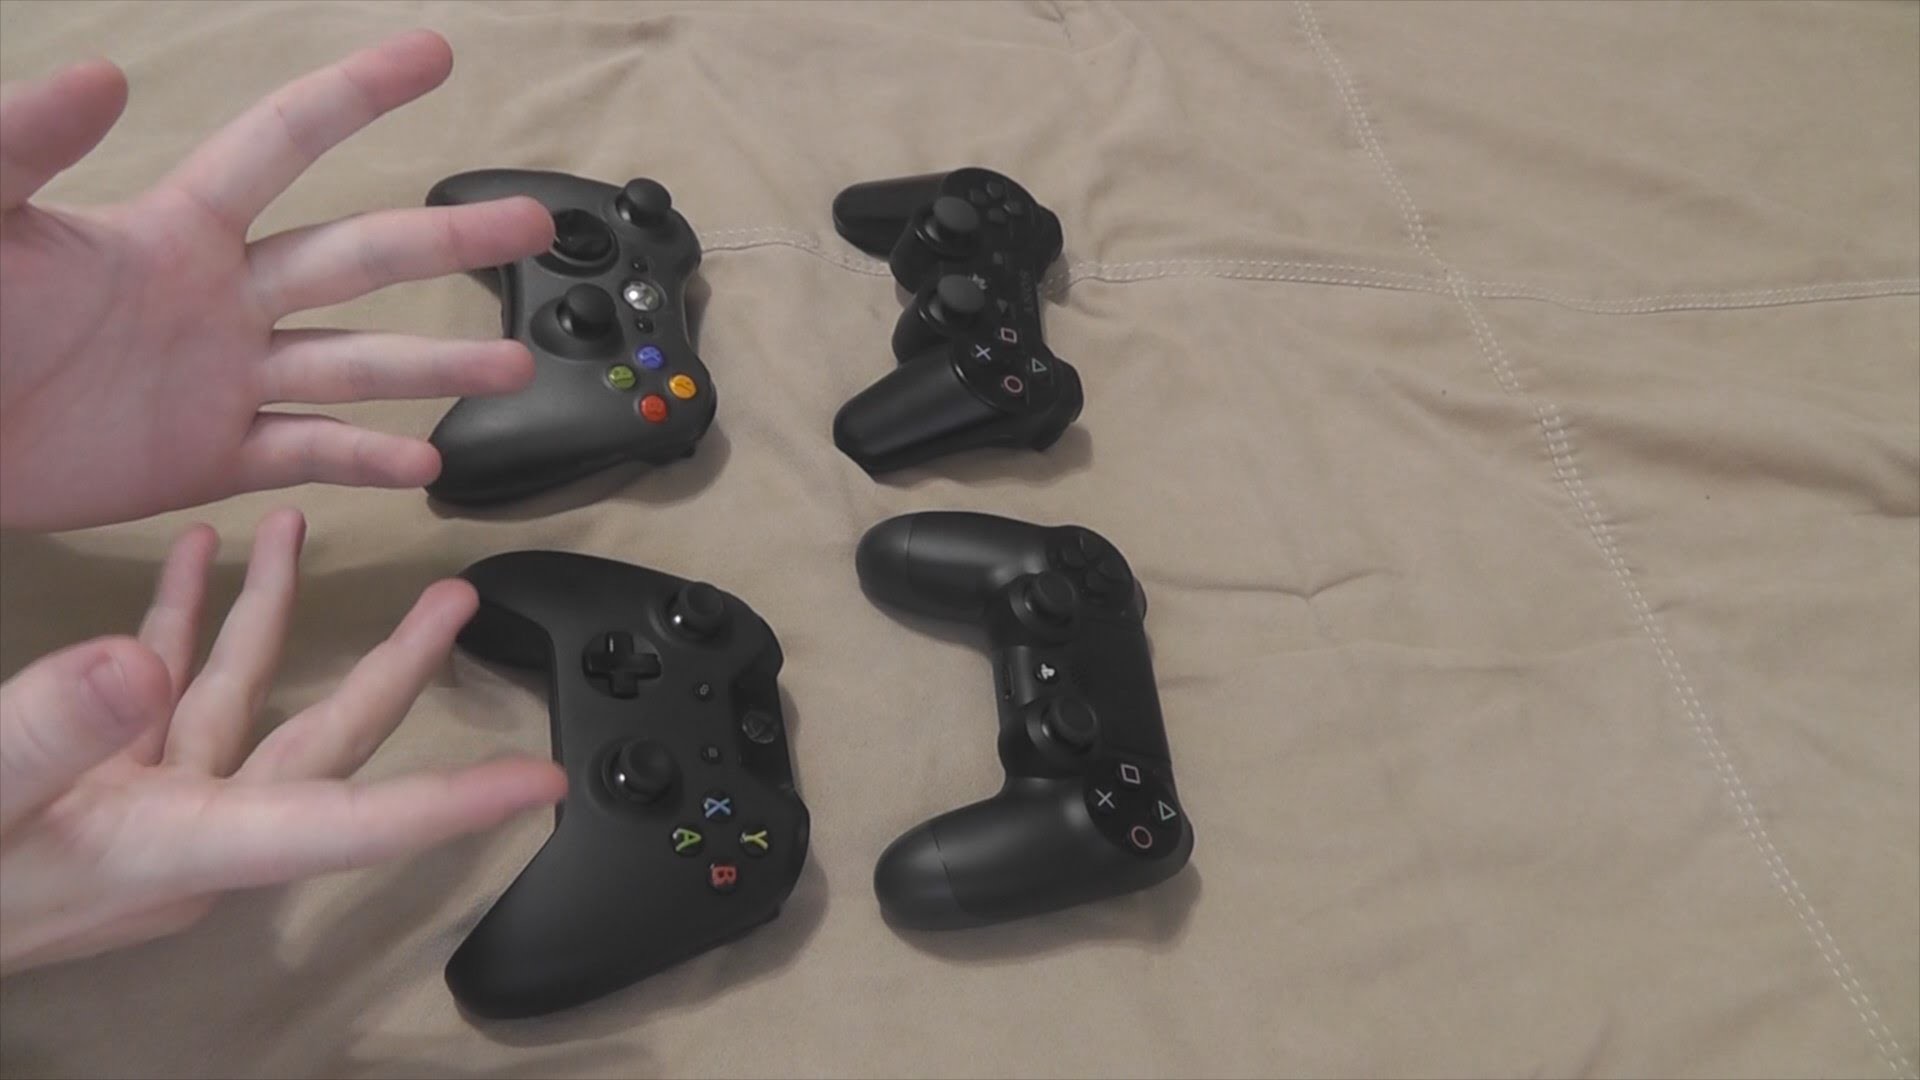 1920x1080 BIG HANDS: PS4 vs Xbox One Controller vs Xbox 360 Controller vs PS3  Controller Comparison - YouTube